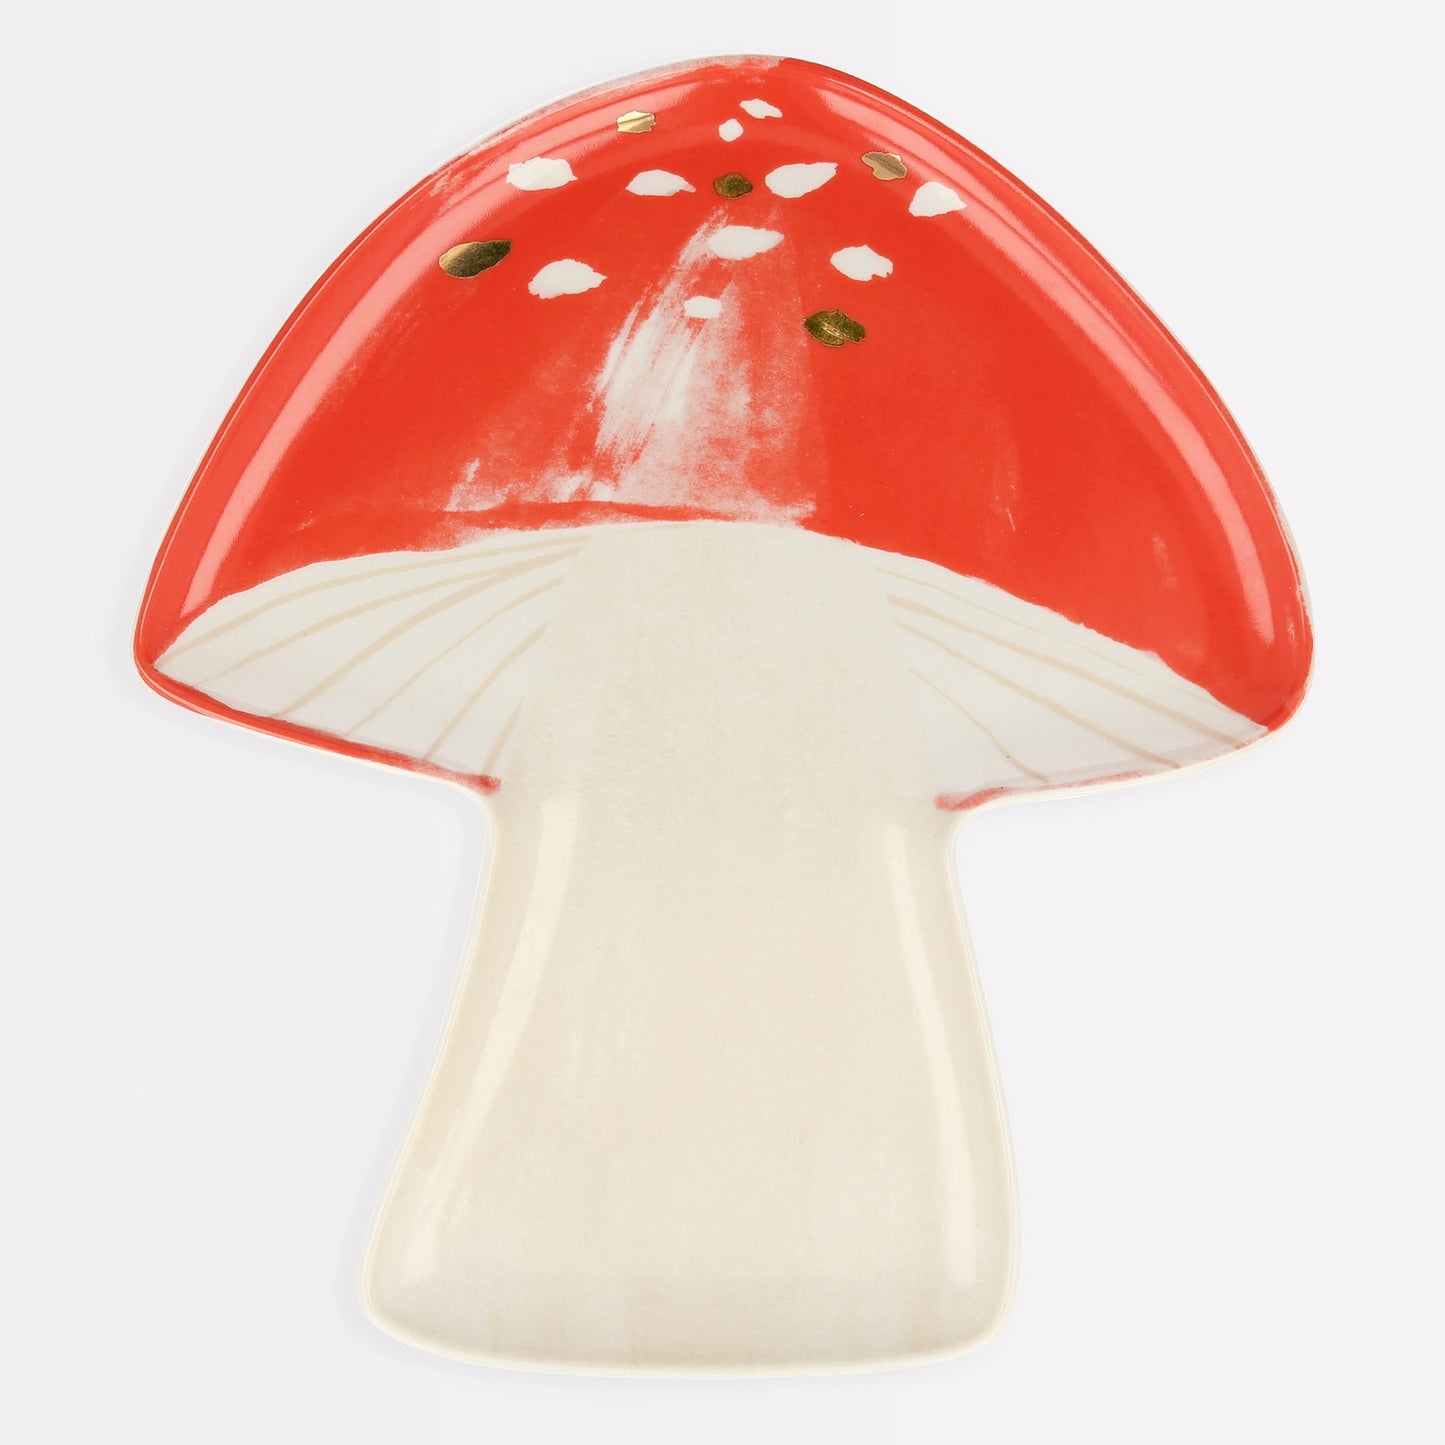 Porcelain Mushroom Plate